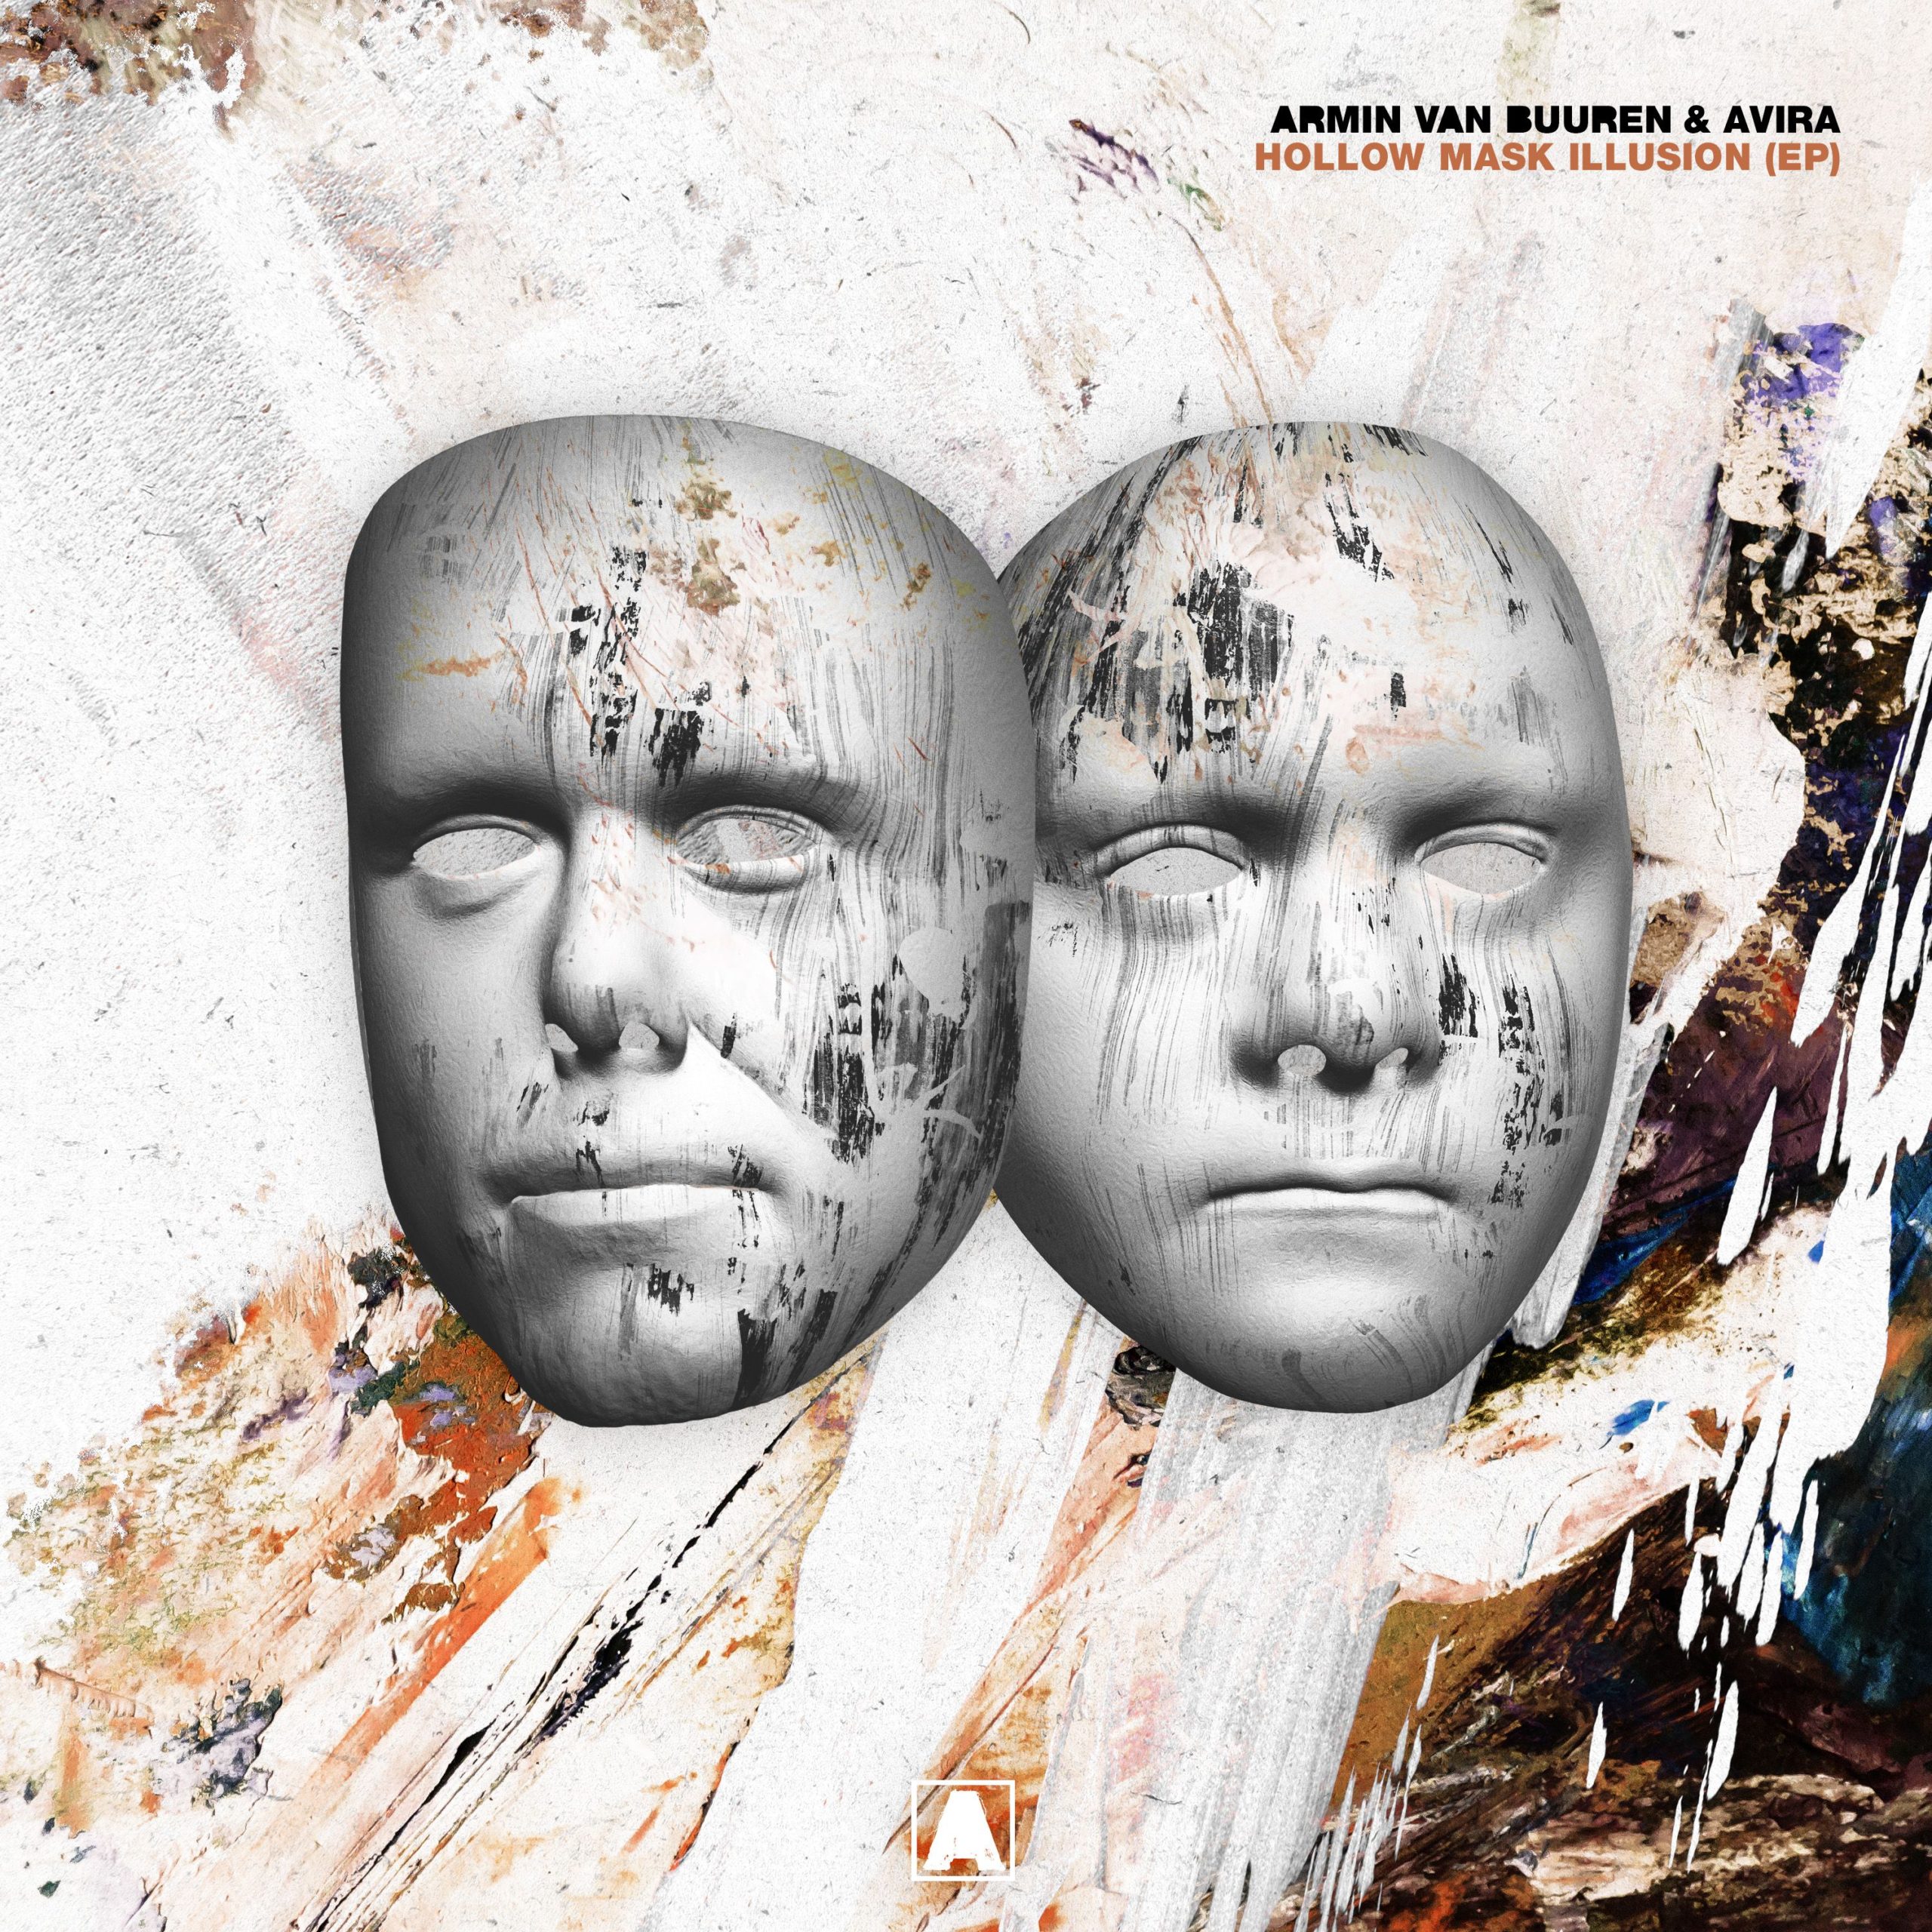 Armin van Buuren and AVIRA presents Hollow Mask Illusion (EP) on Armada Music